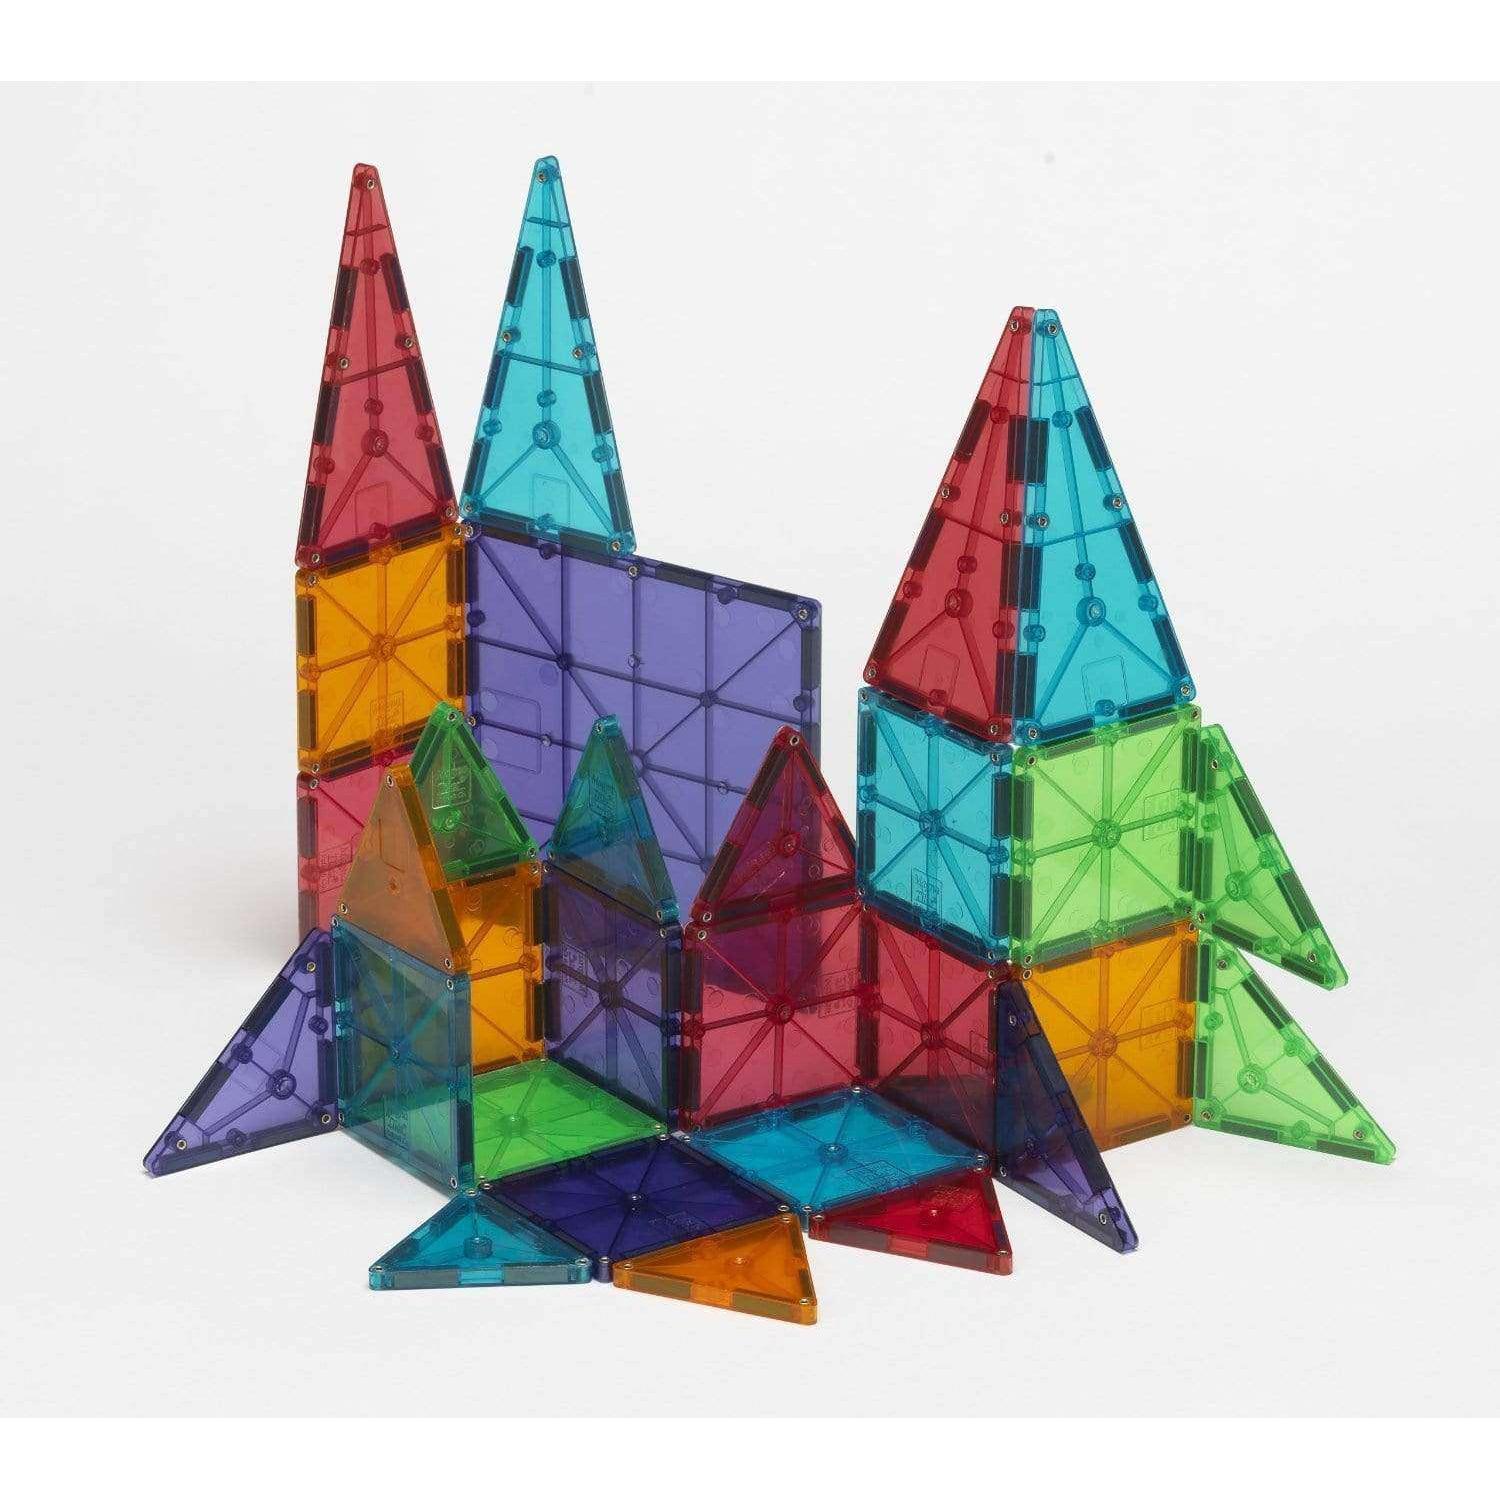 Magna Tiles Stardust 30 Piece Set Magnetic Toy Magnetic Tiles